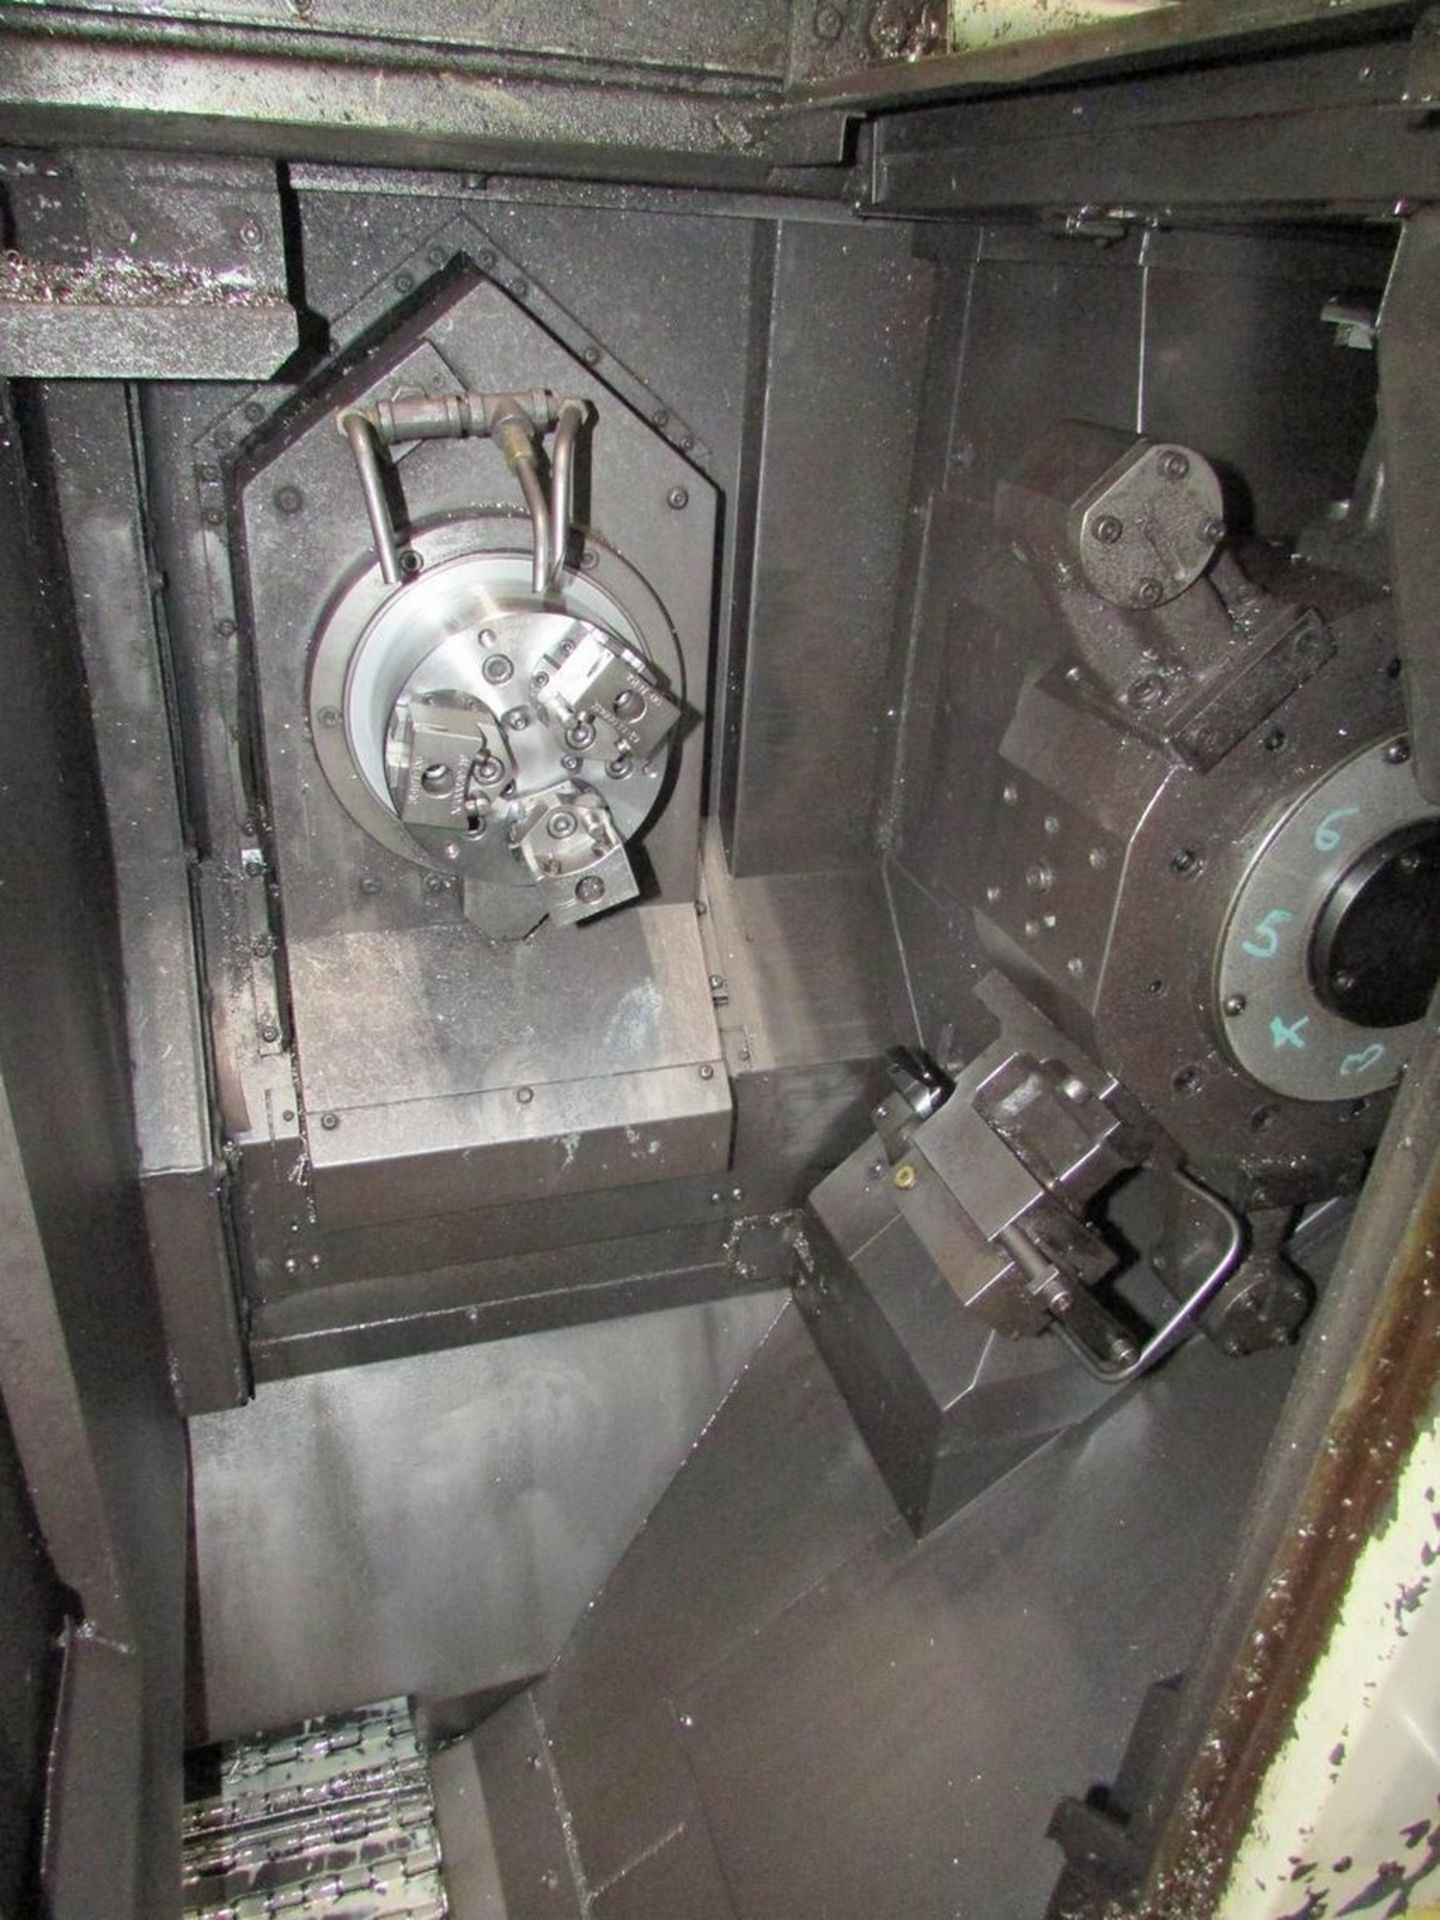 Okuma Lathe LFS10-2SP Twin-Spindle Twin-Turret CNC Turning Center, S/N 0122 - Image 6 of 15